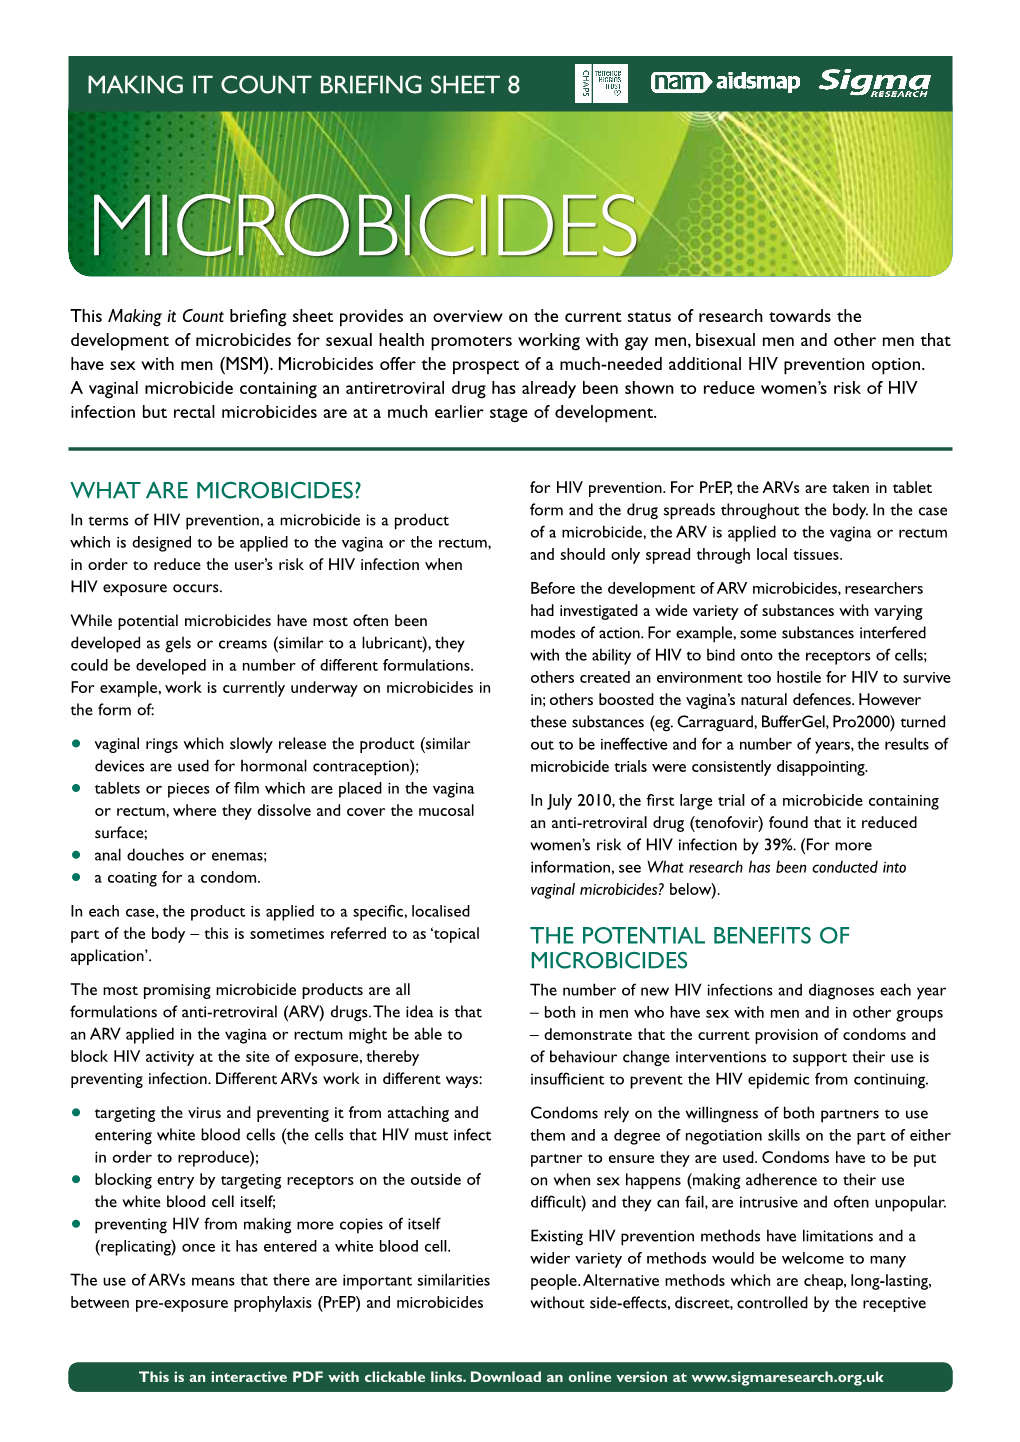 Microbicides